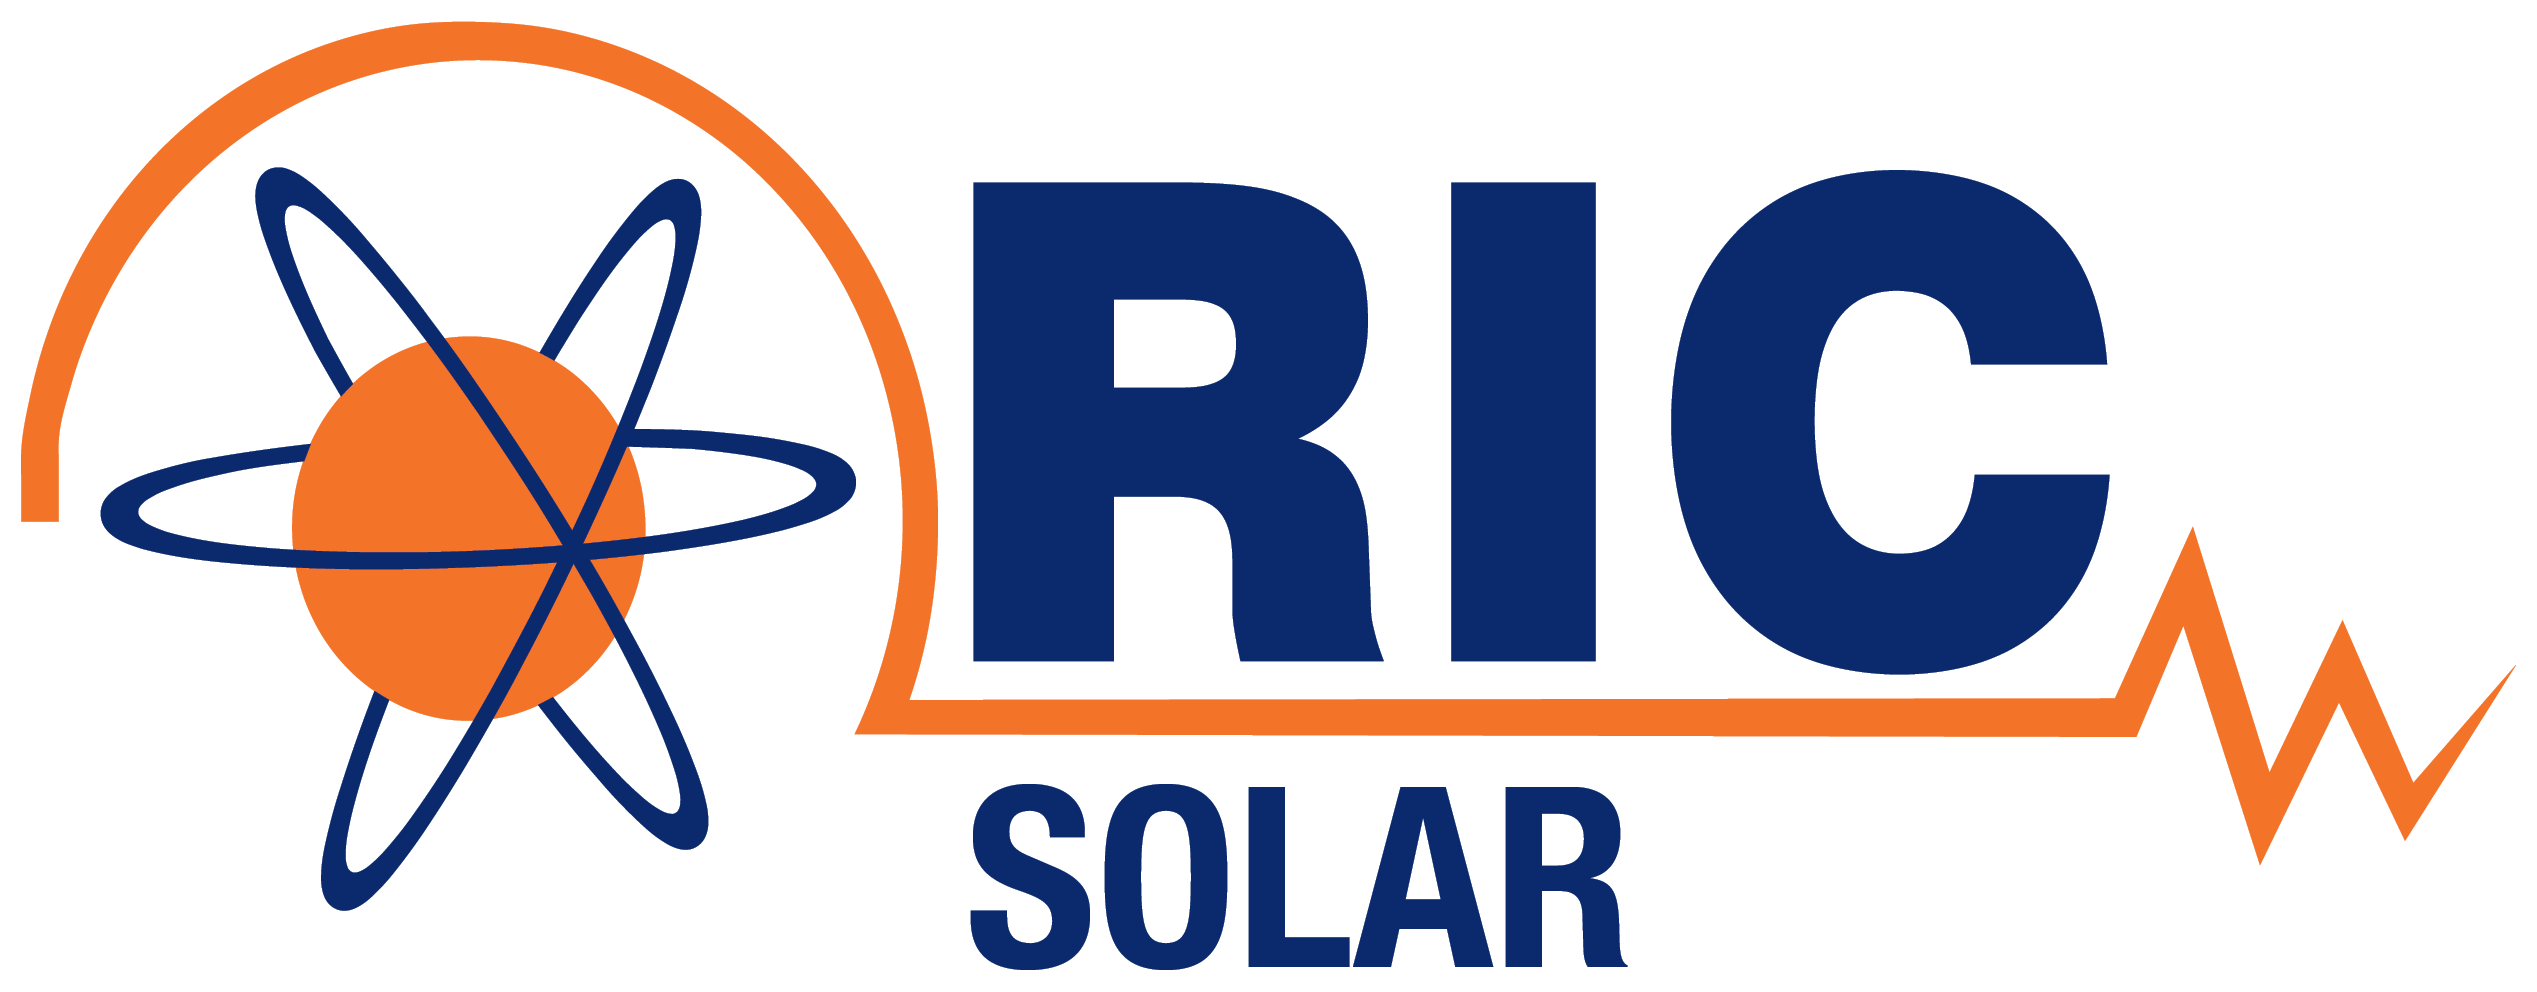 RIC solar Logo